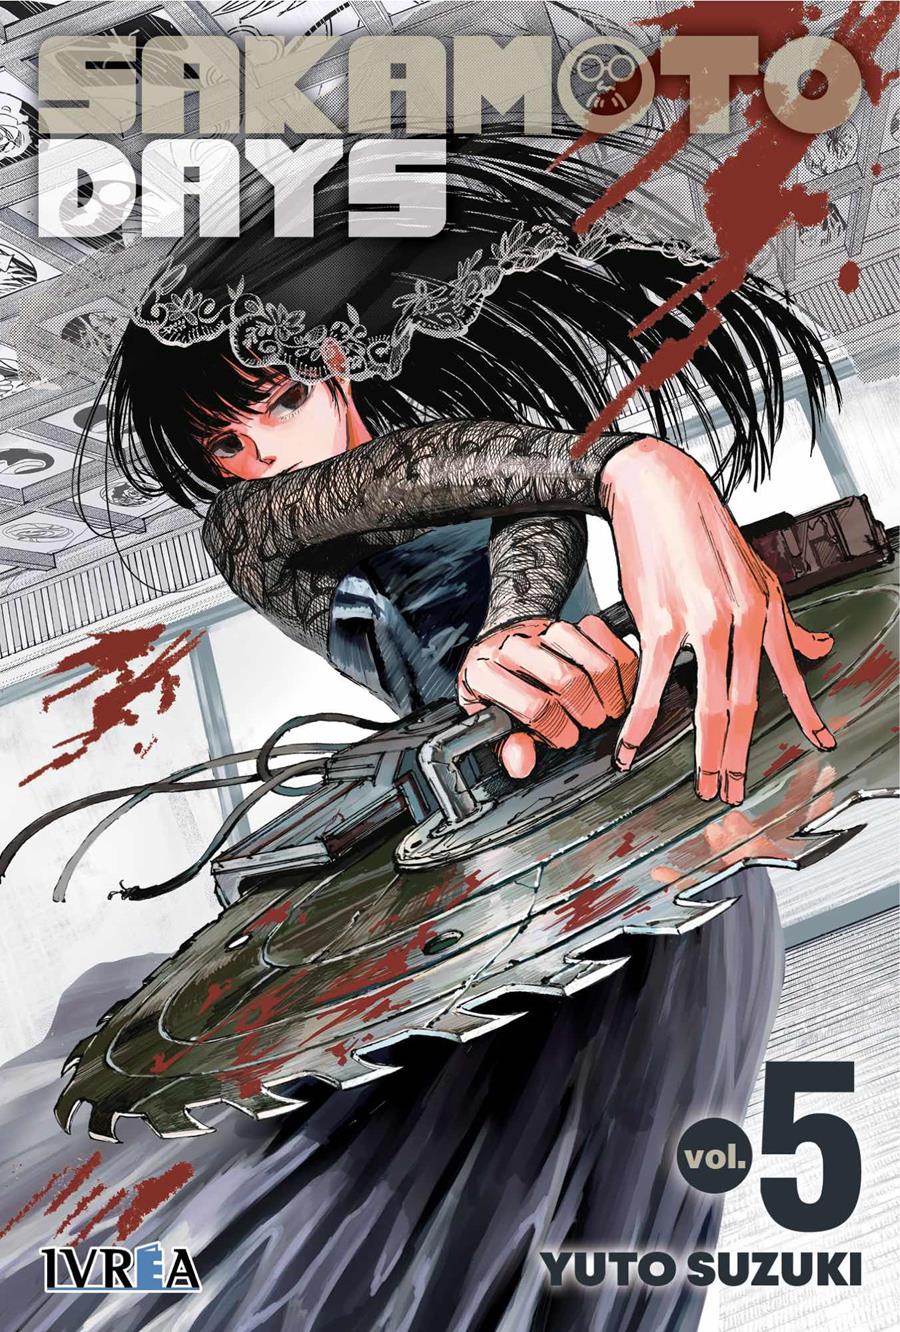 Sakamoto days 05 | N1222-IVR08 | Yuto Suzuki | Terra de Còmic - Tu tienda de cómics online especializada en cómics, manga y merchandising